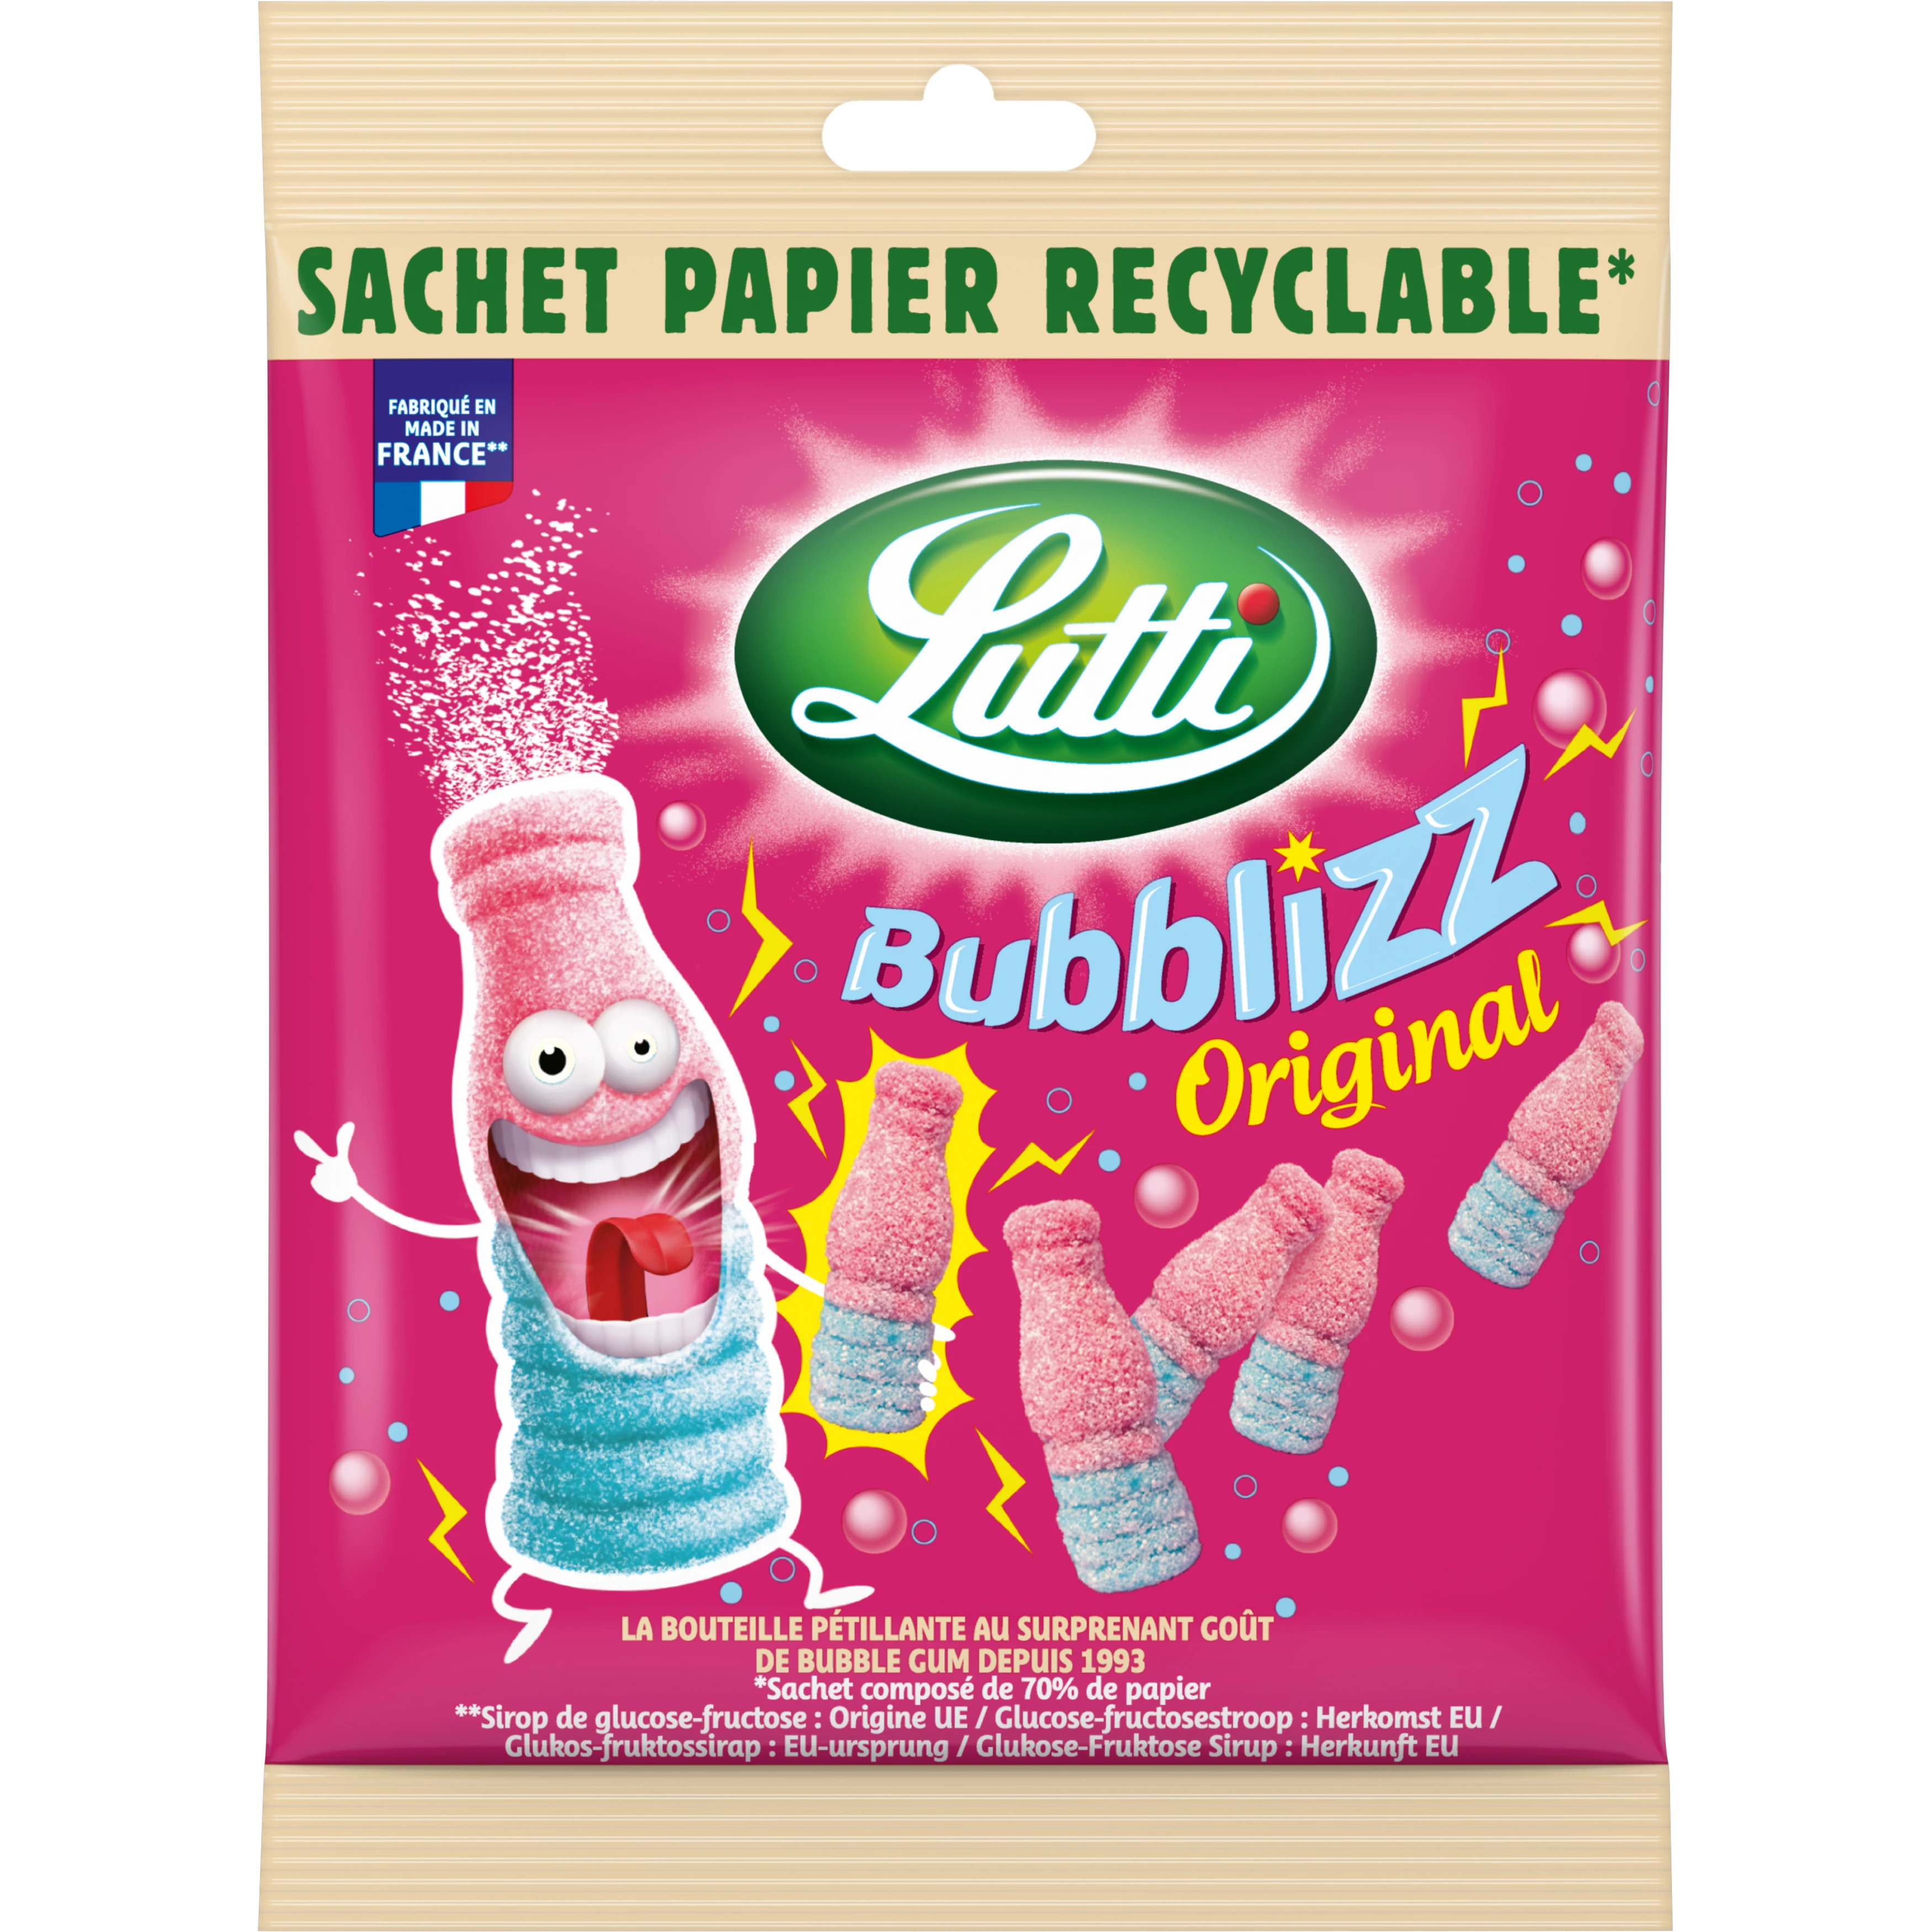 Lutti Bubblizz Pack Recyc 170 جرام